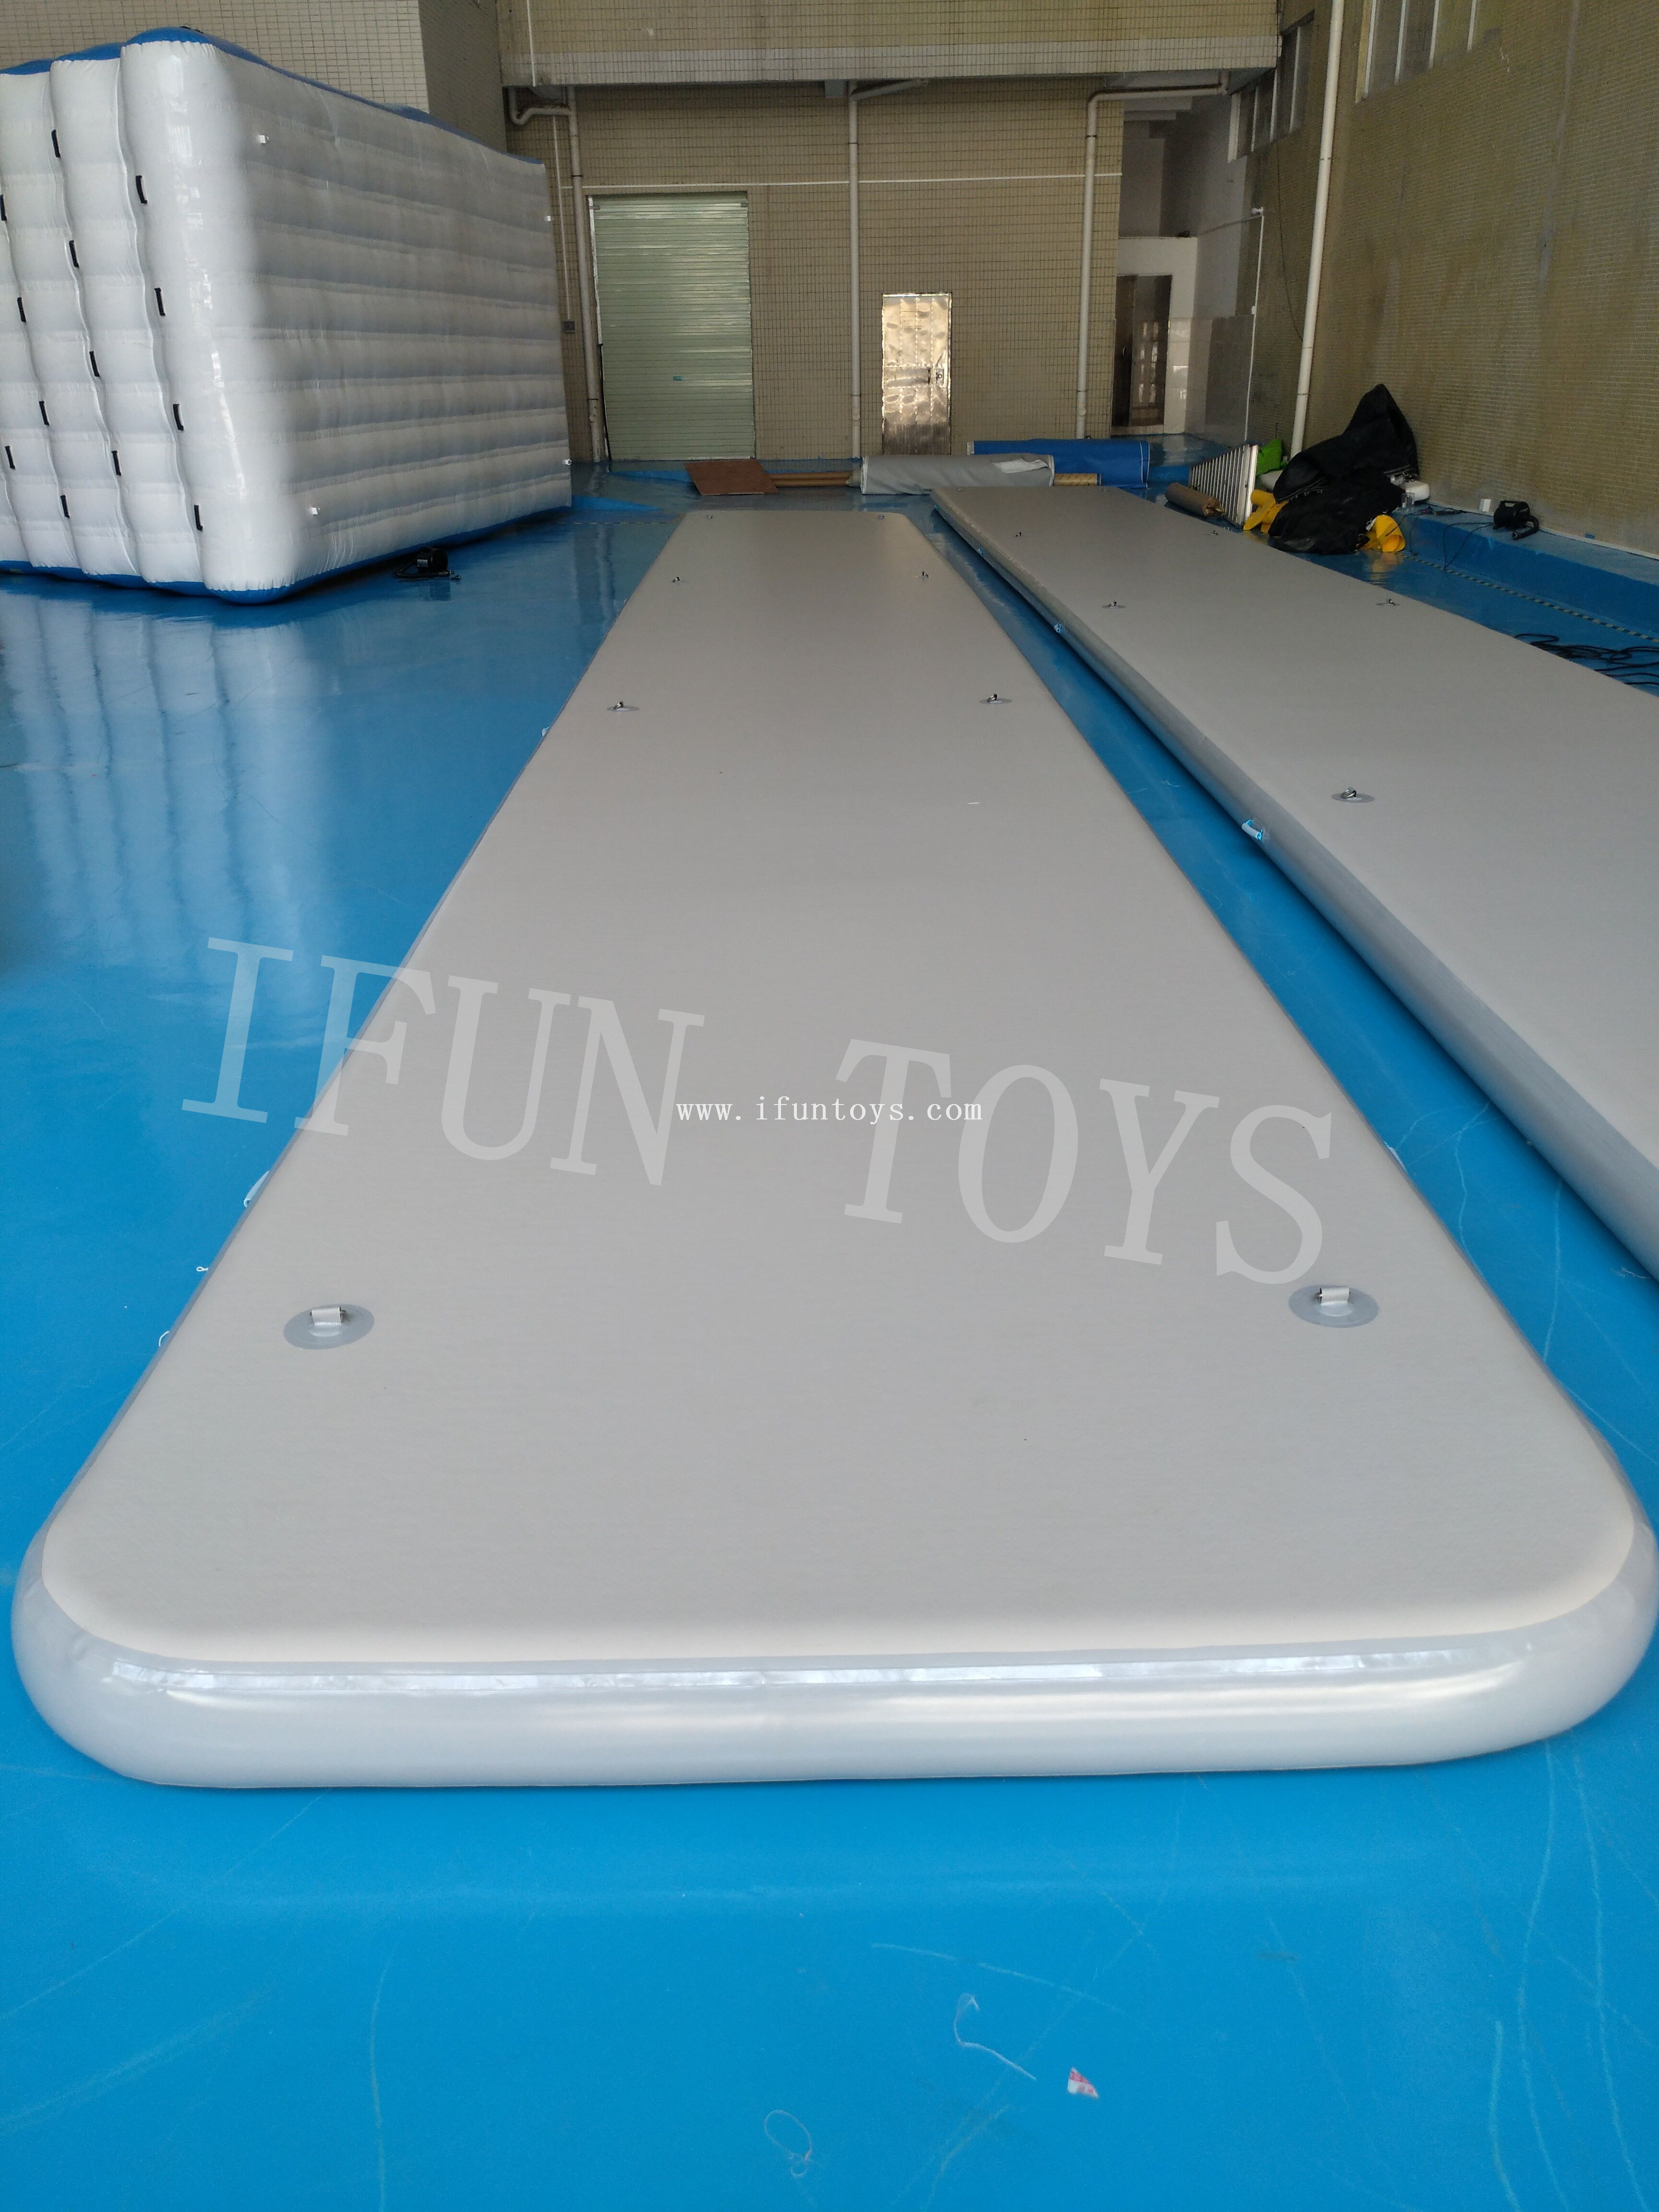 Inflatable Gymnastics Air Track / Floating Island Swim Platform / Pontoon Dock Water Floating Platform